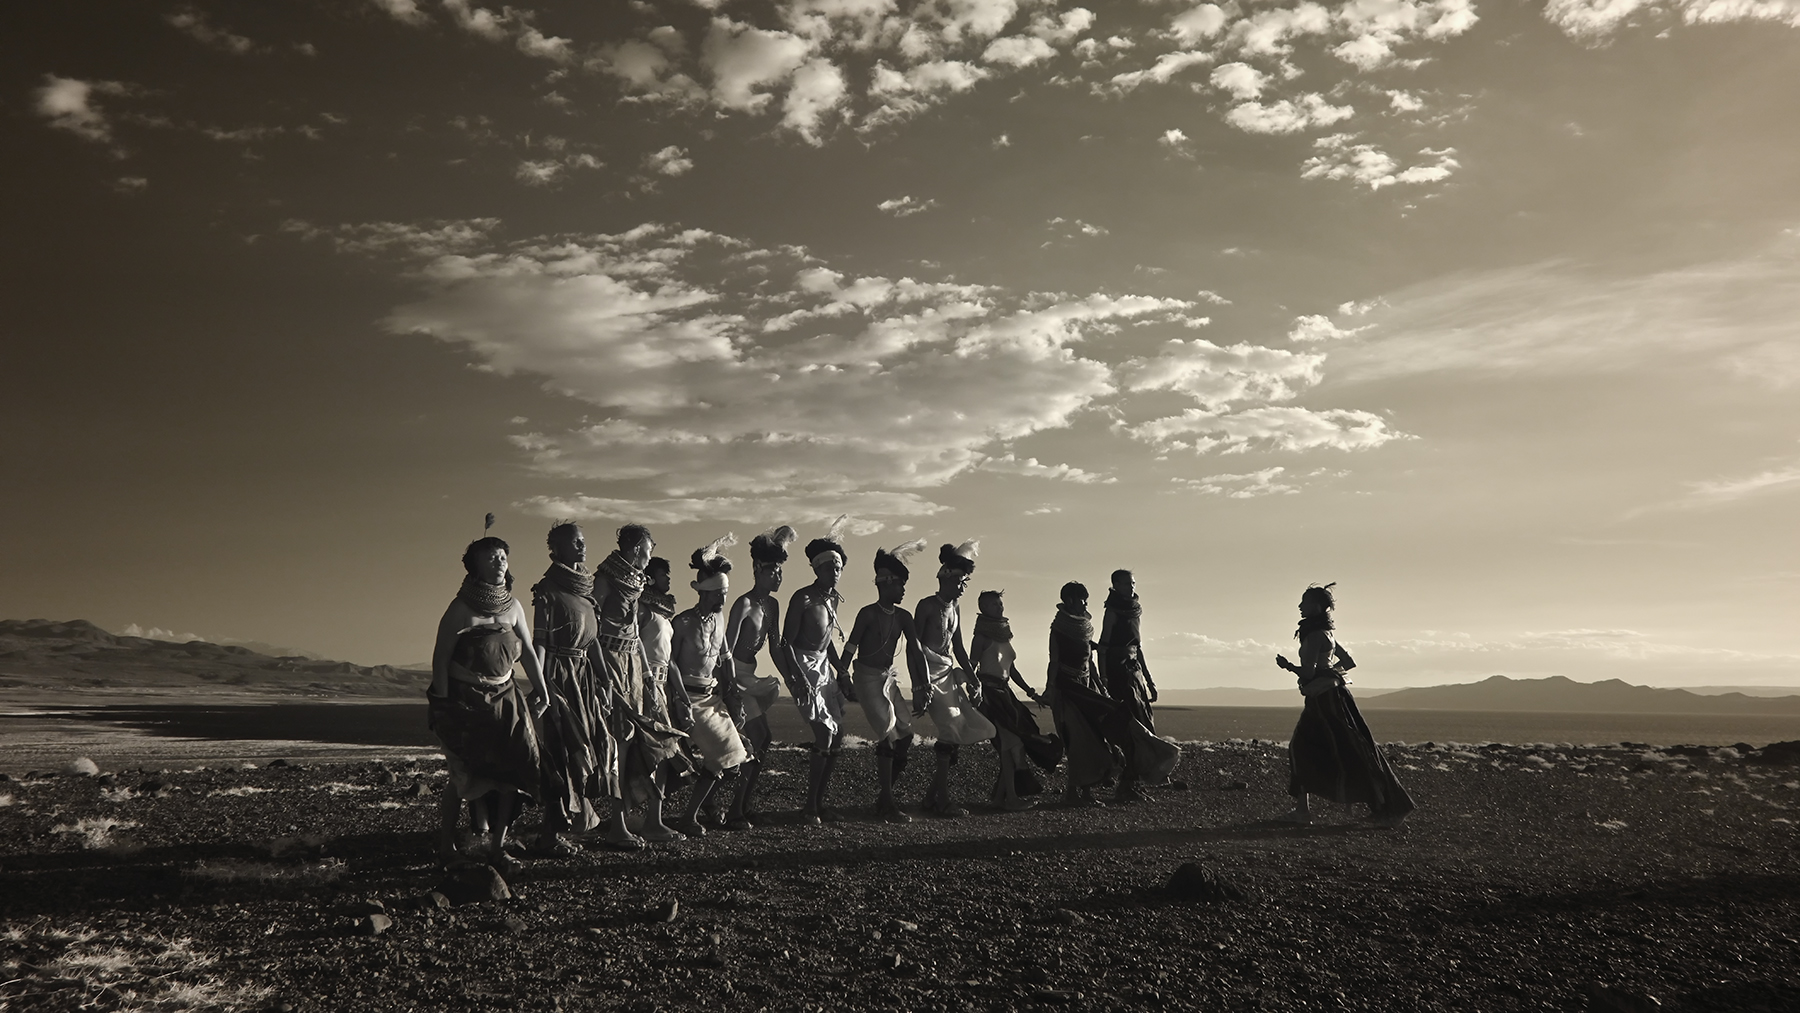 Fine art print of the Turkana tribe dancing in the landscape of Lake Turkana, Kenya